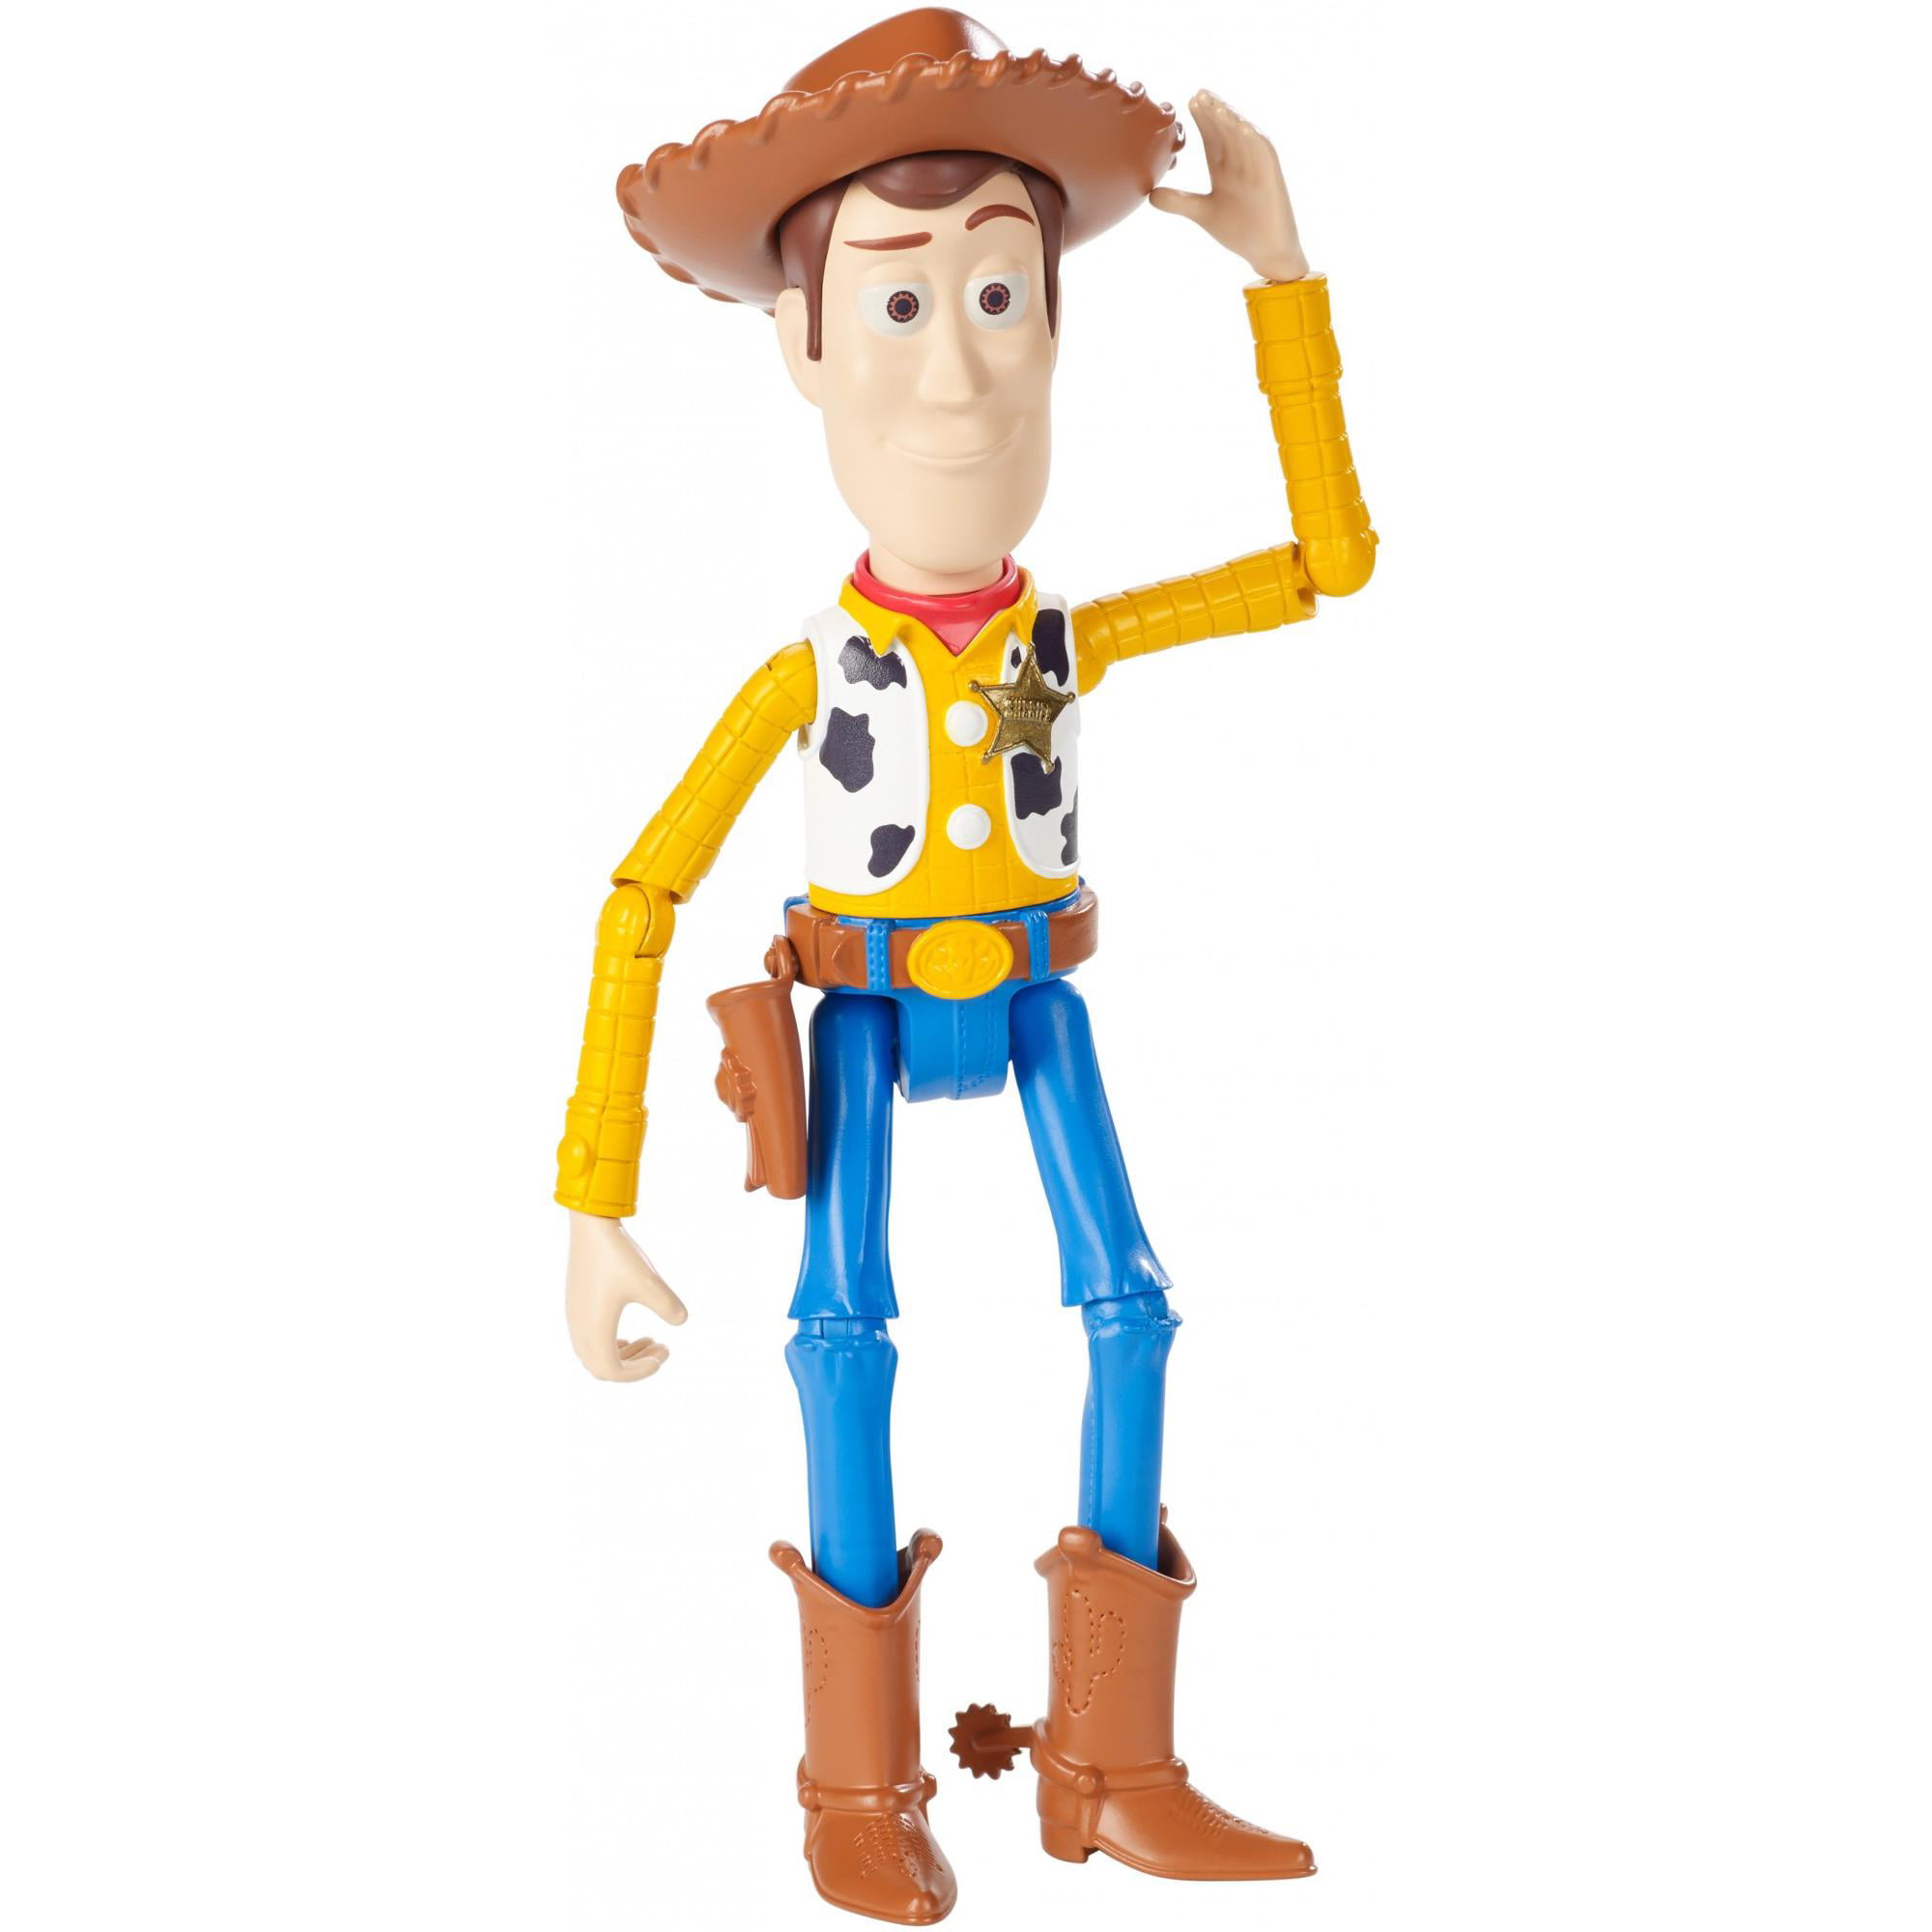 Disney Pixar Toy Story Woody Character Figure With Authentic Details Walmart Com Walmart Com